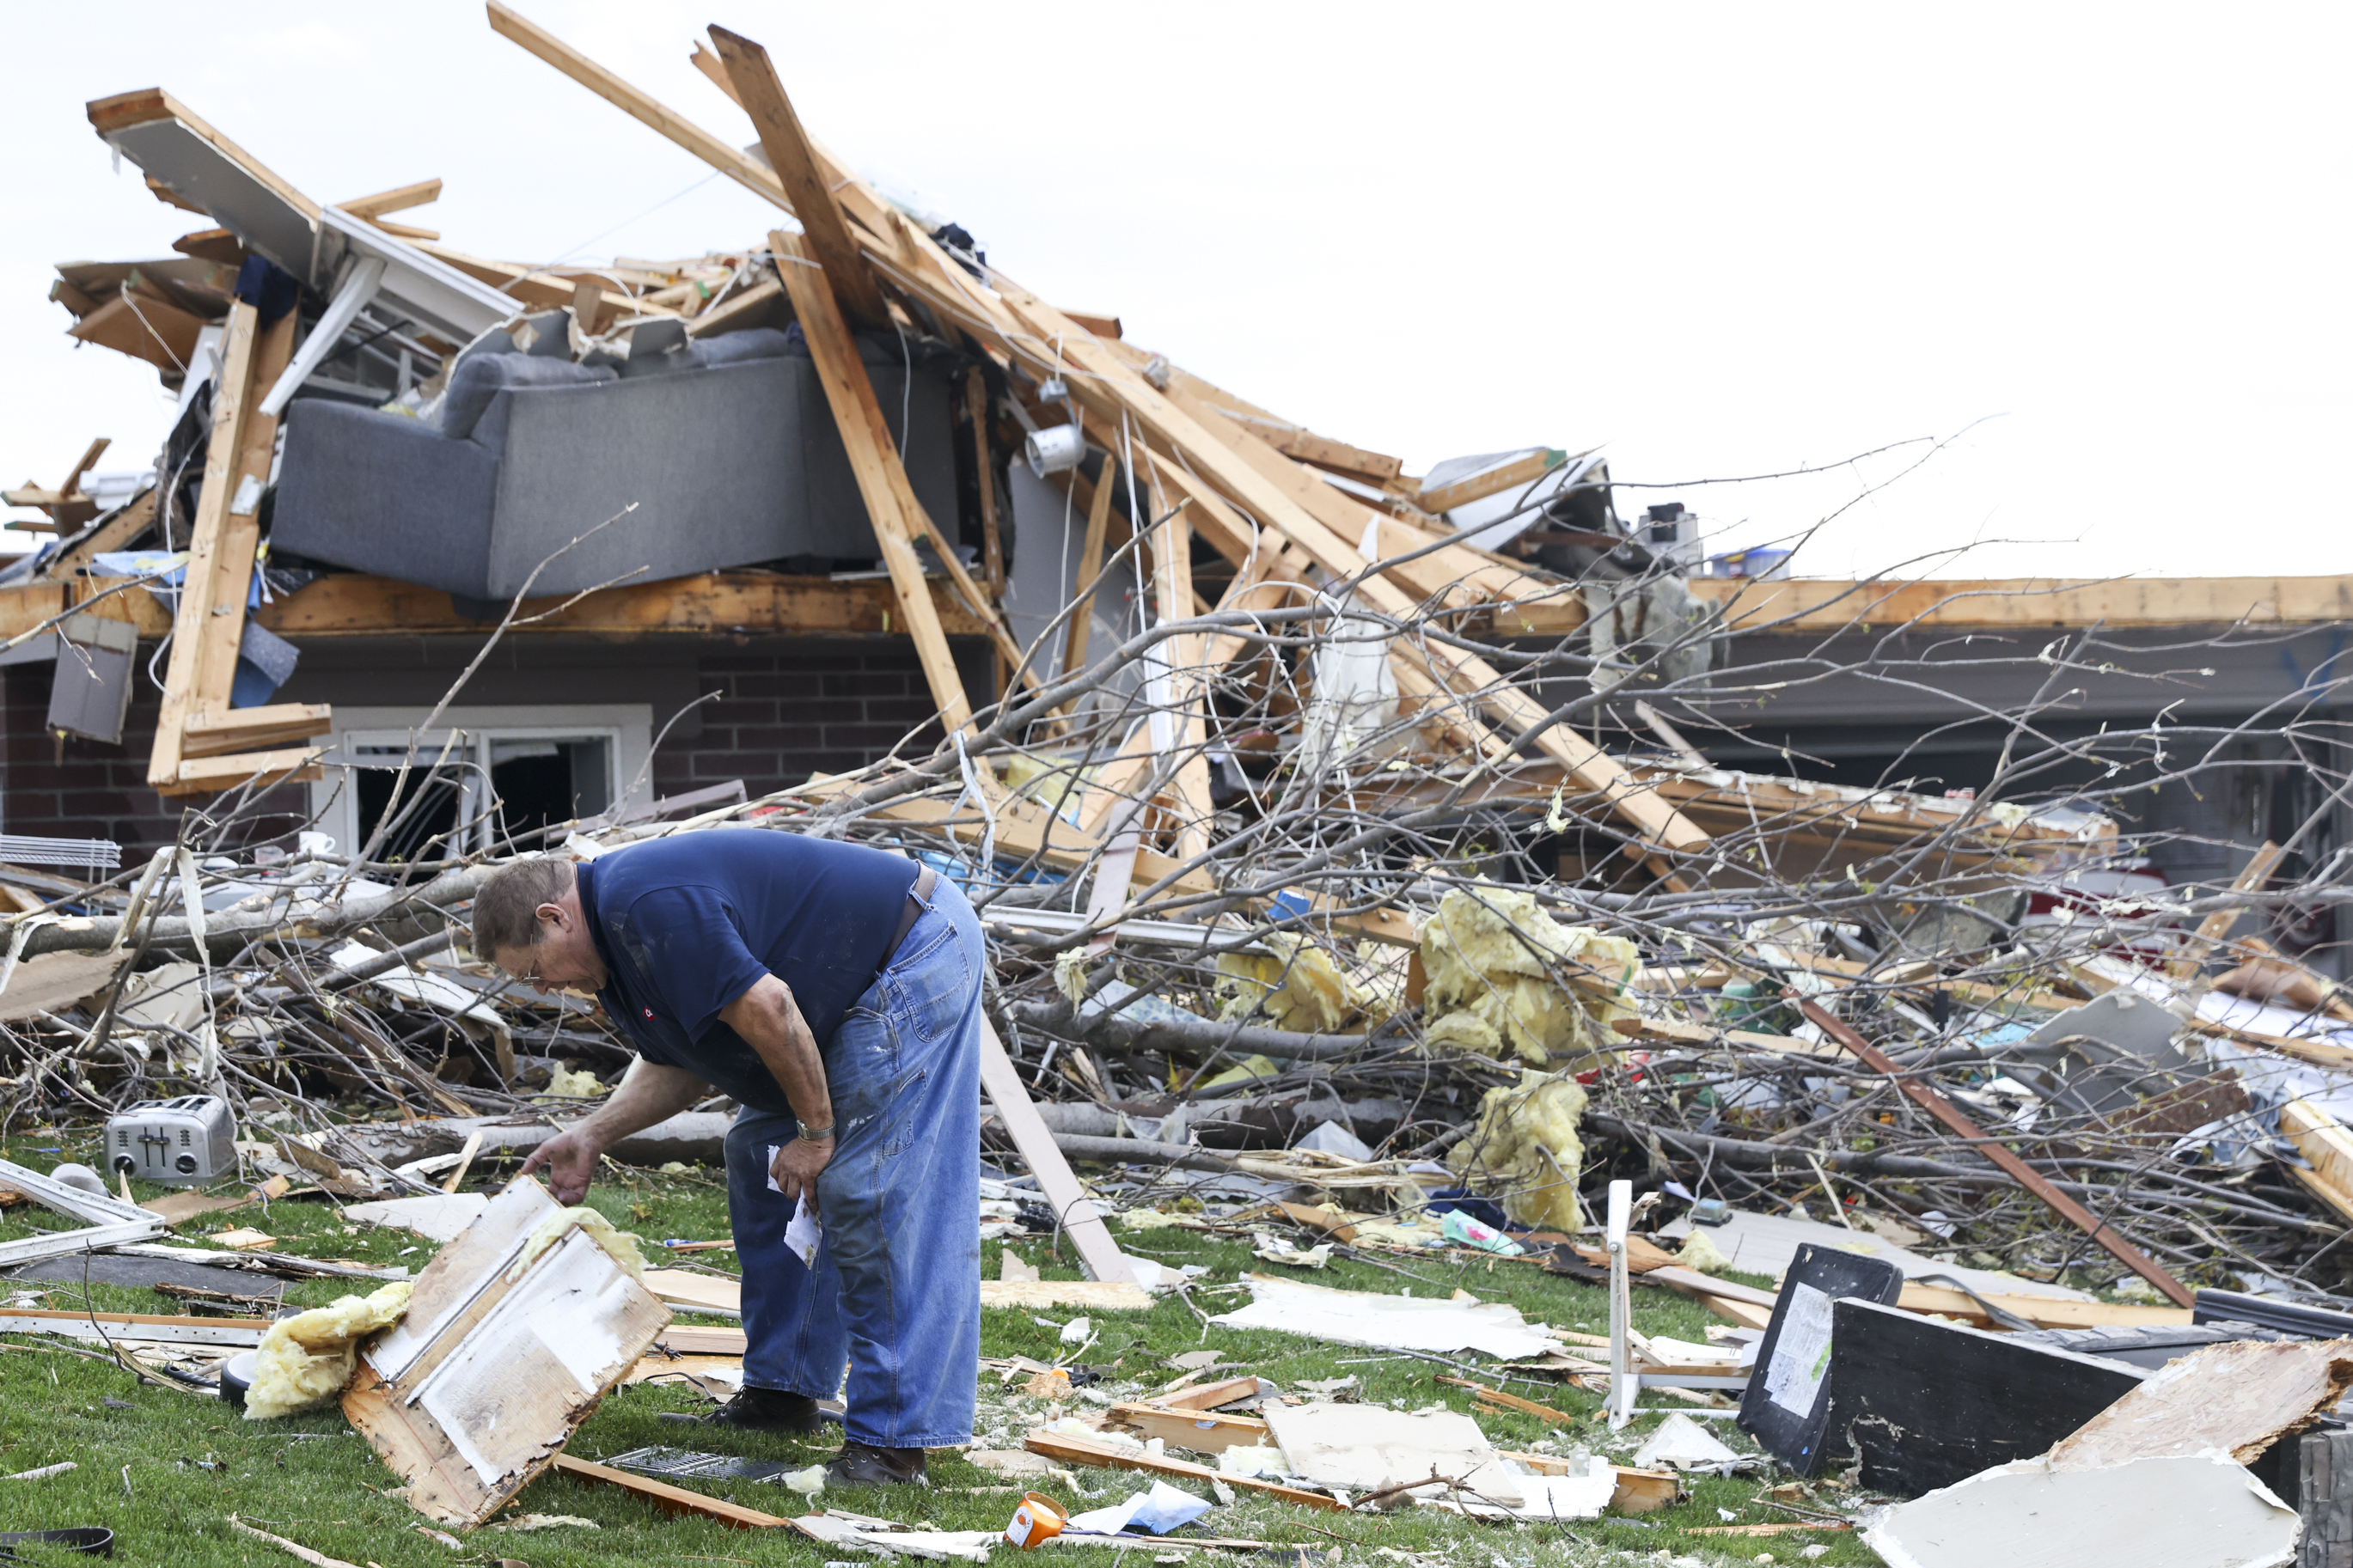 Tornadoes Strike In Nebraska And Iowa, Destroying Homes